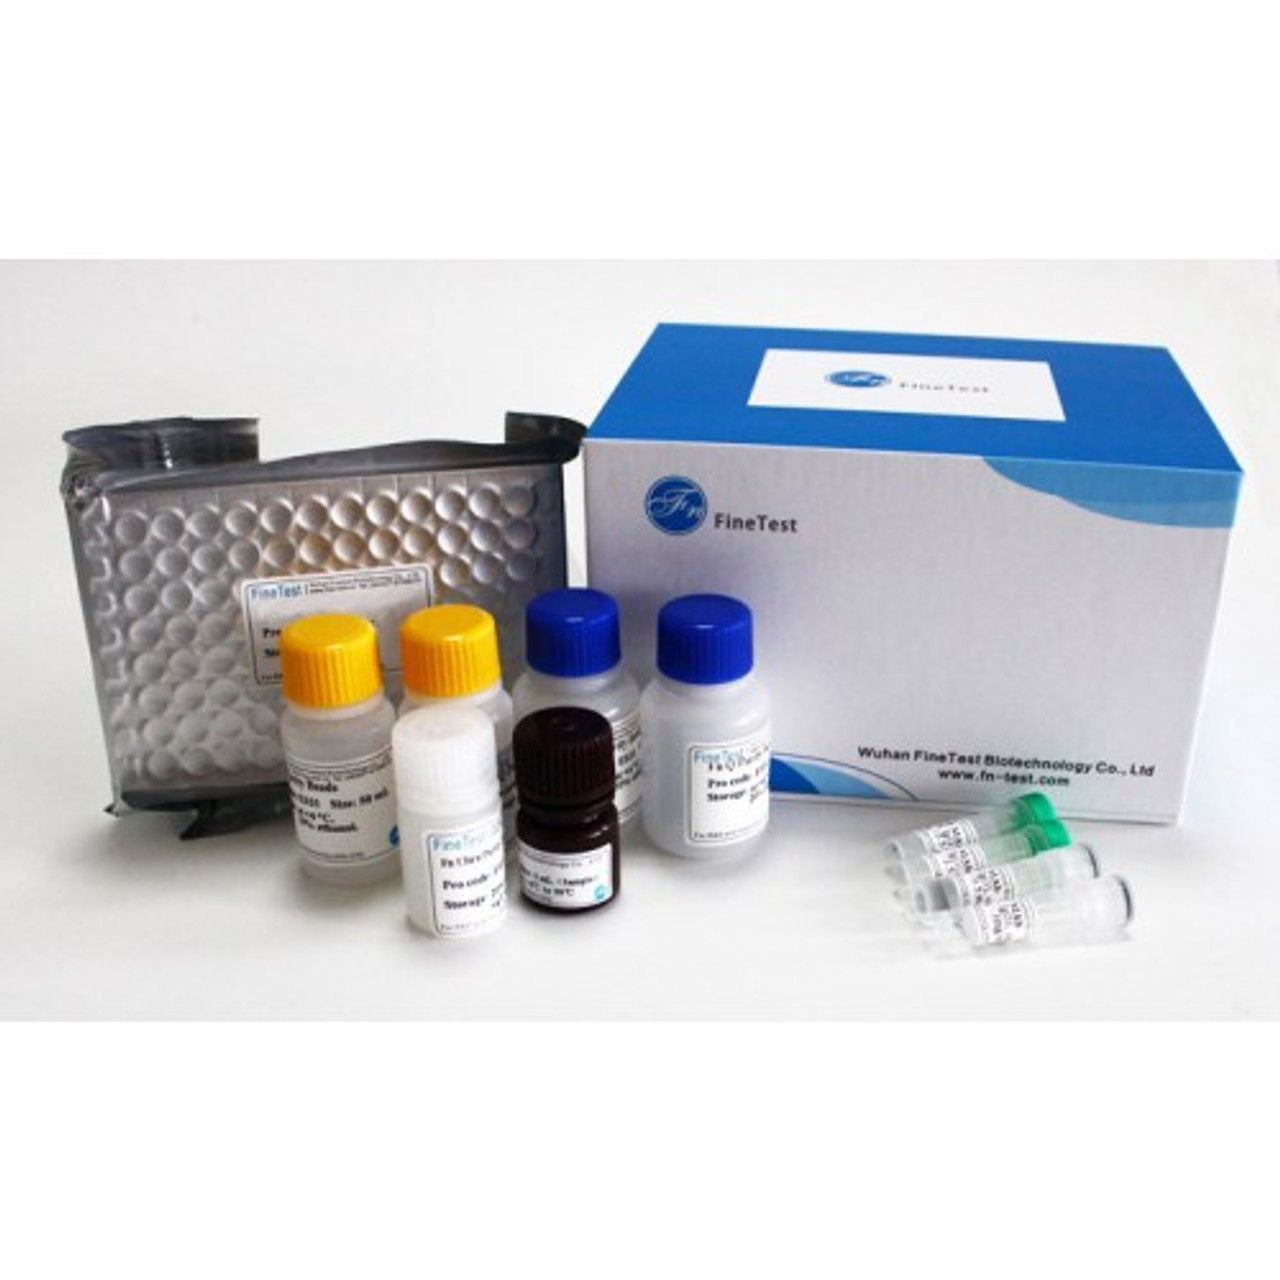 Rat CXCL16(Chemokine C-X-C-Motif Ligand 16) ELISA Kit